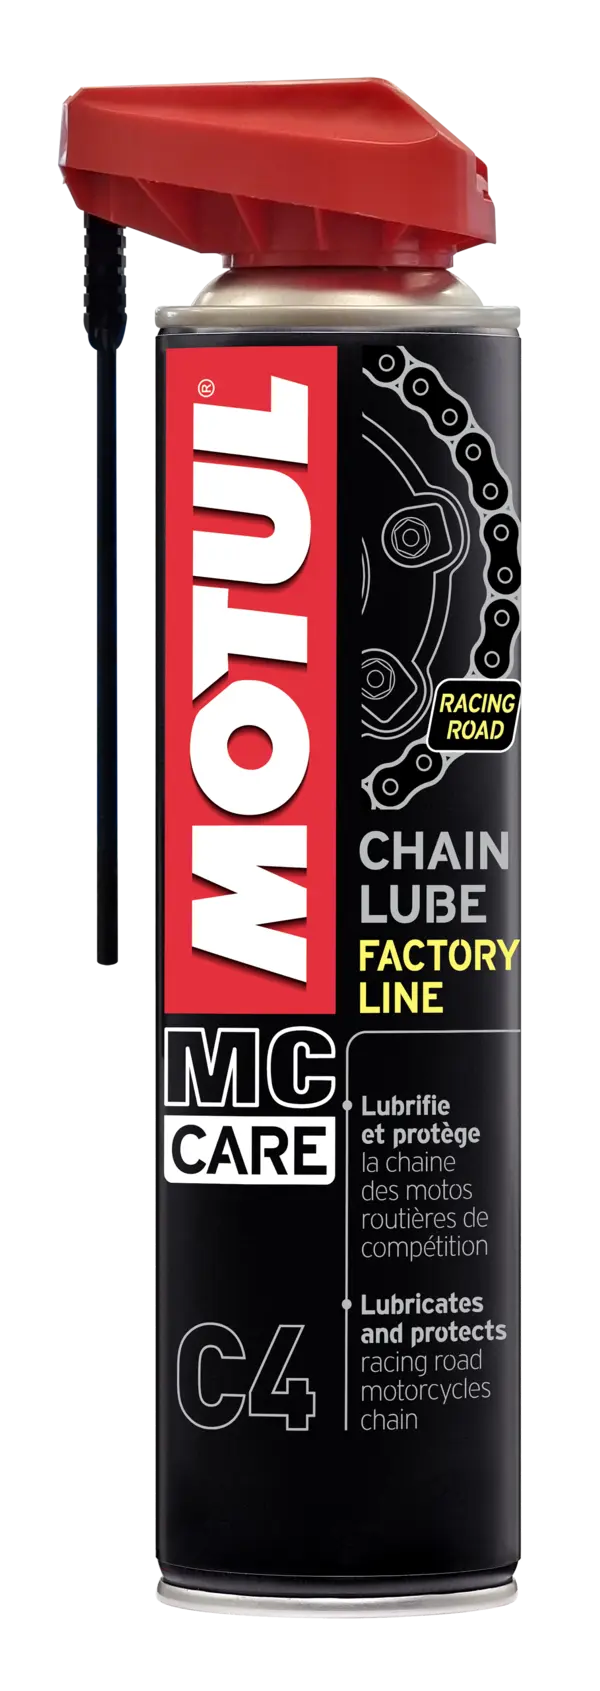 Chain Lube Factory line MC Care C4 Motul Graisse Chaîne Moto